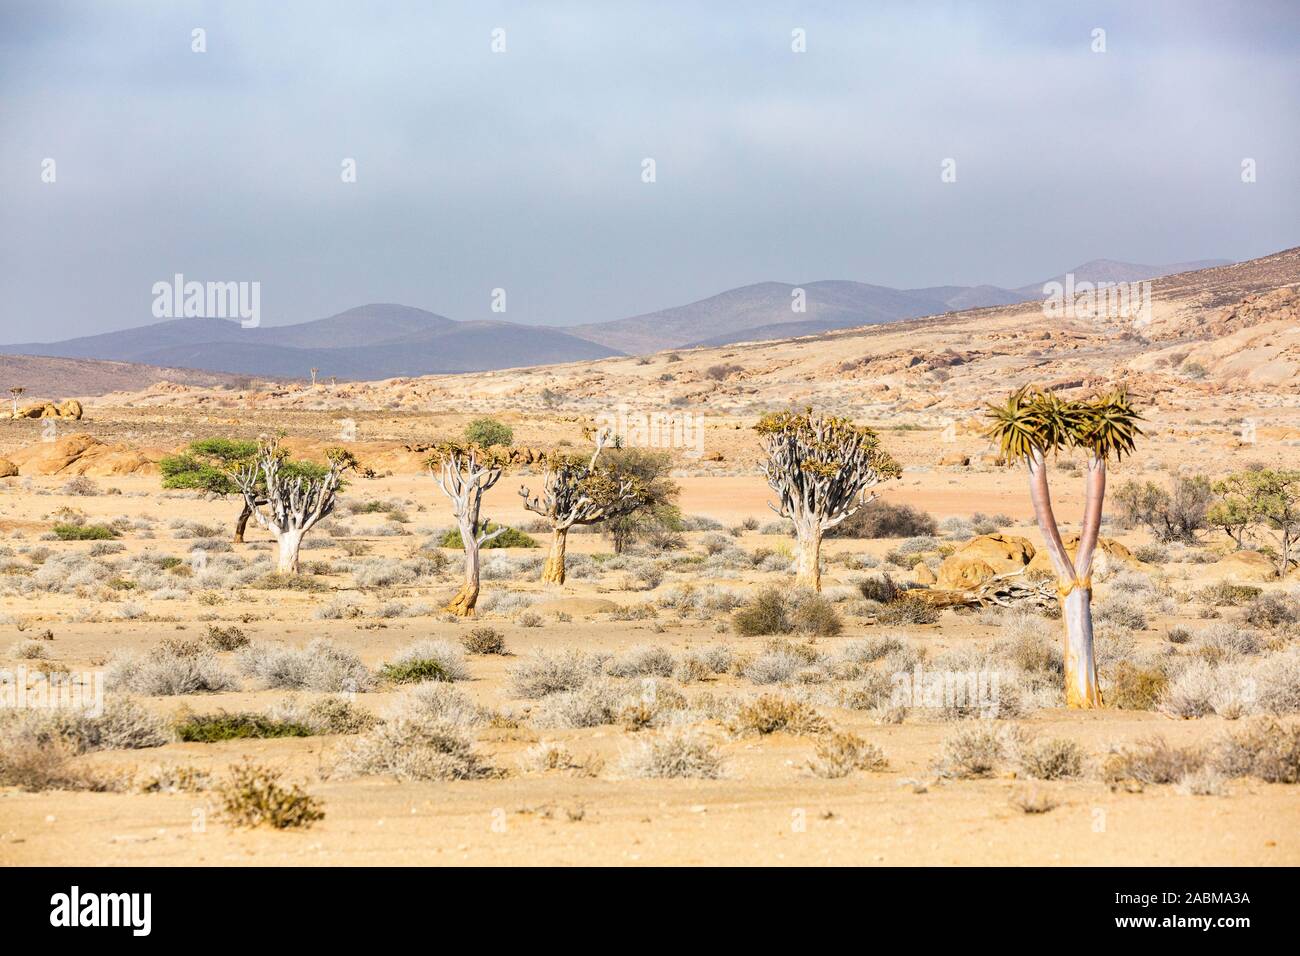 Namibia carcaj paisaje con árboles y montañas, Namib Naukluft Park Foto de stock